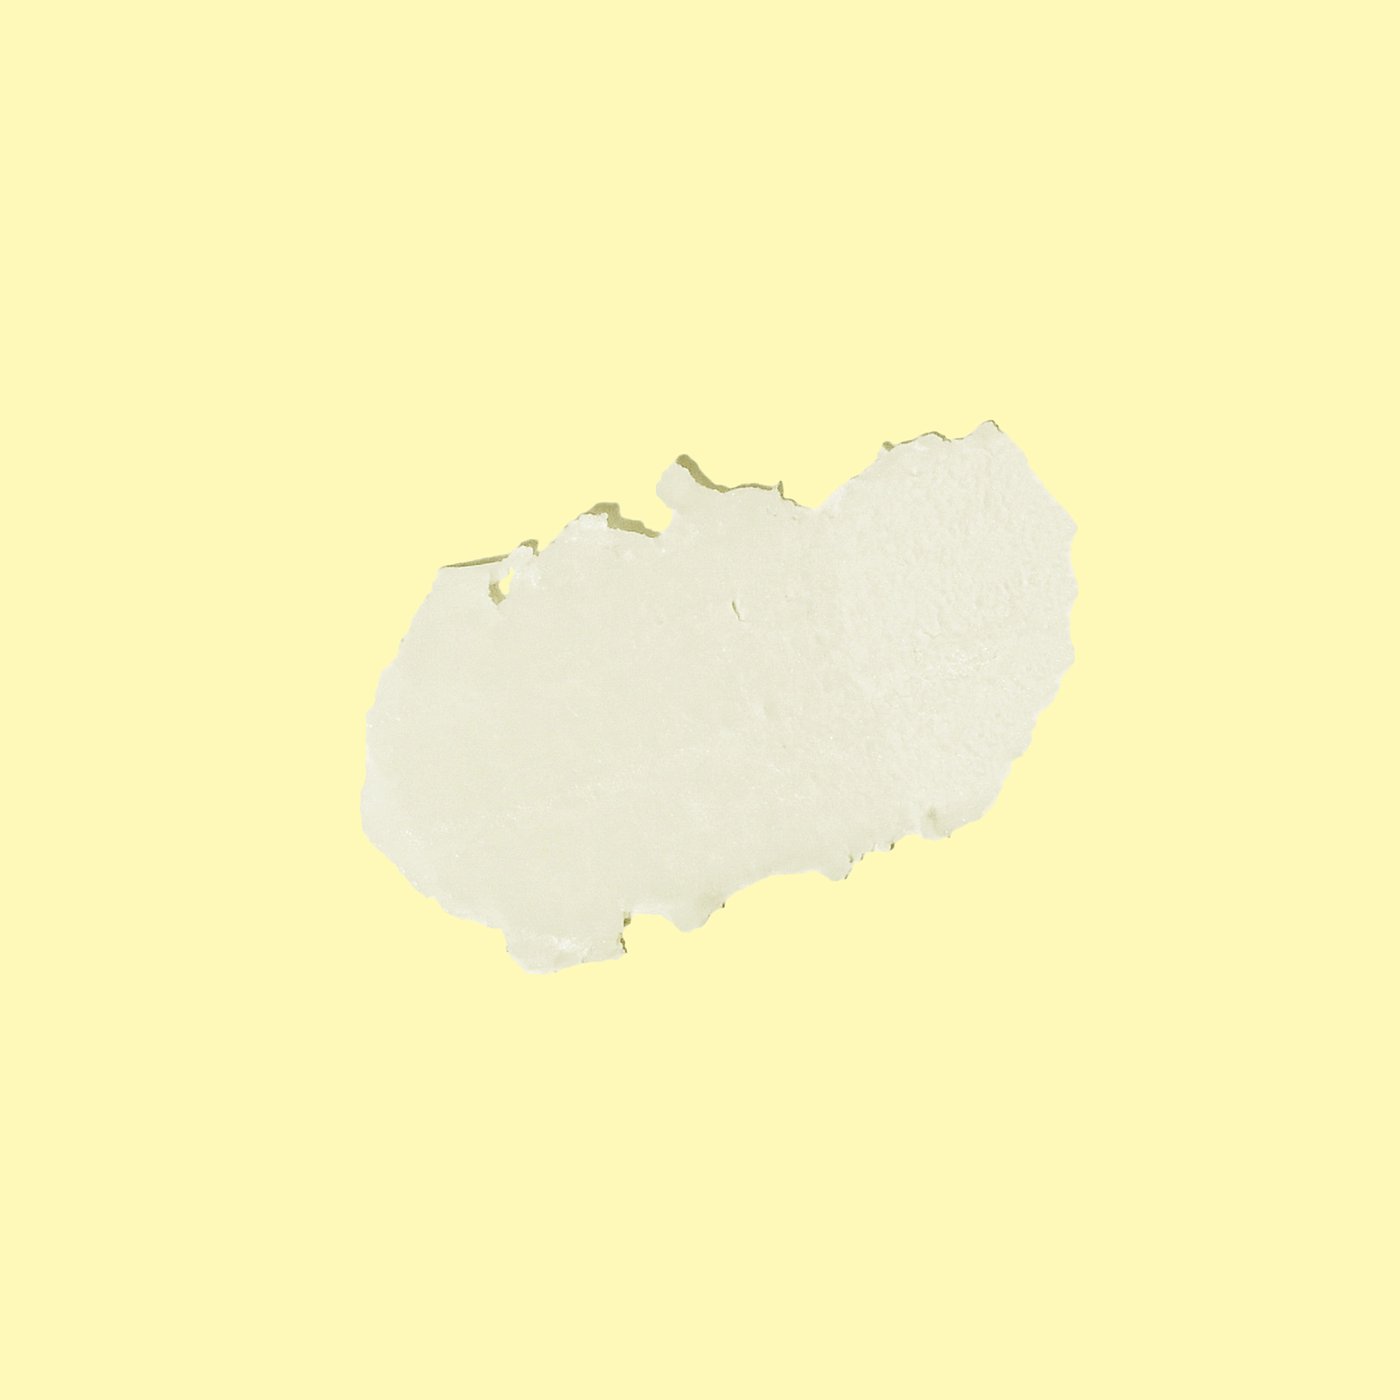 Sun Bum Original SPF 30 Sunscreen Lip Balm – Coconut